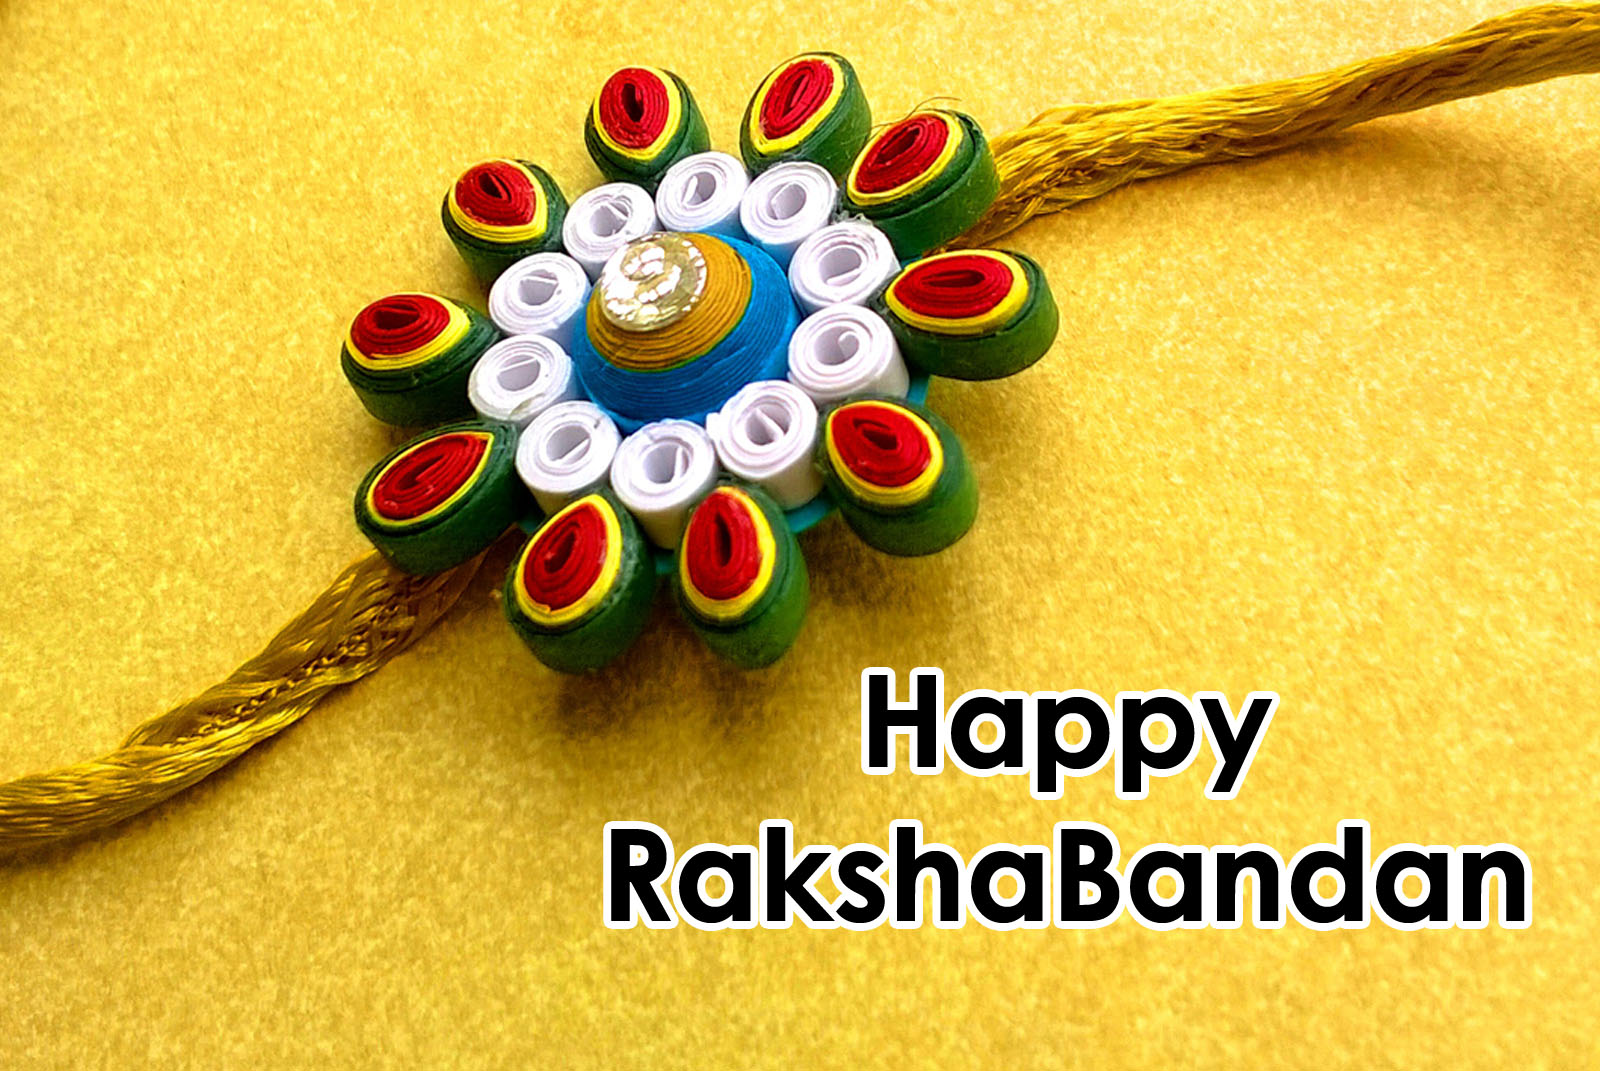 Buy or send Rakhi Gift Set for Brother and Kids Online